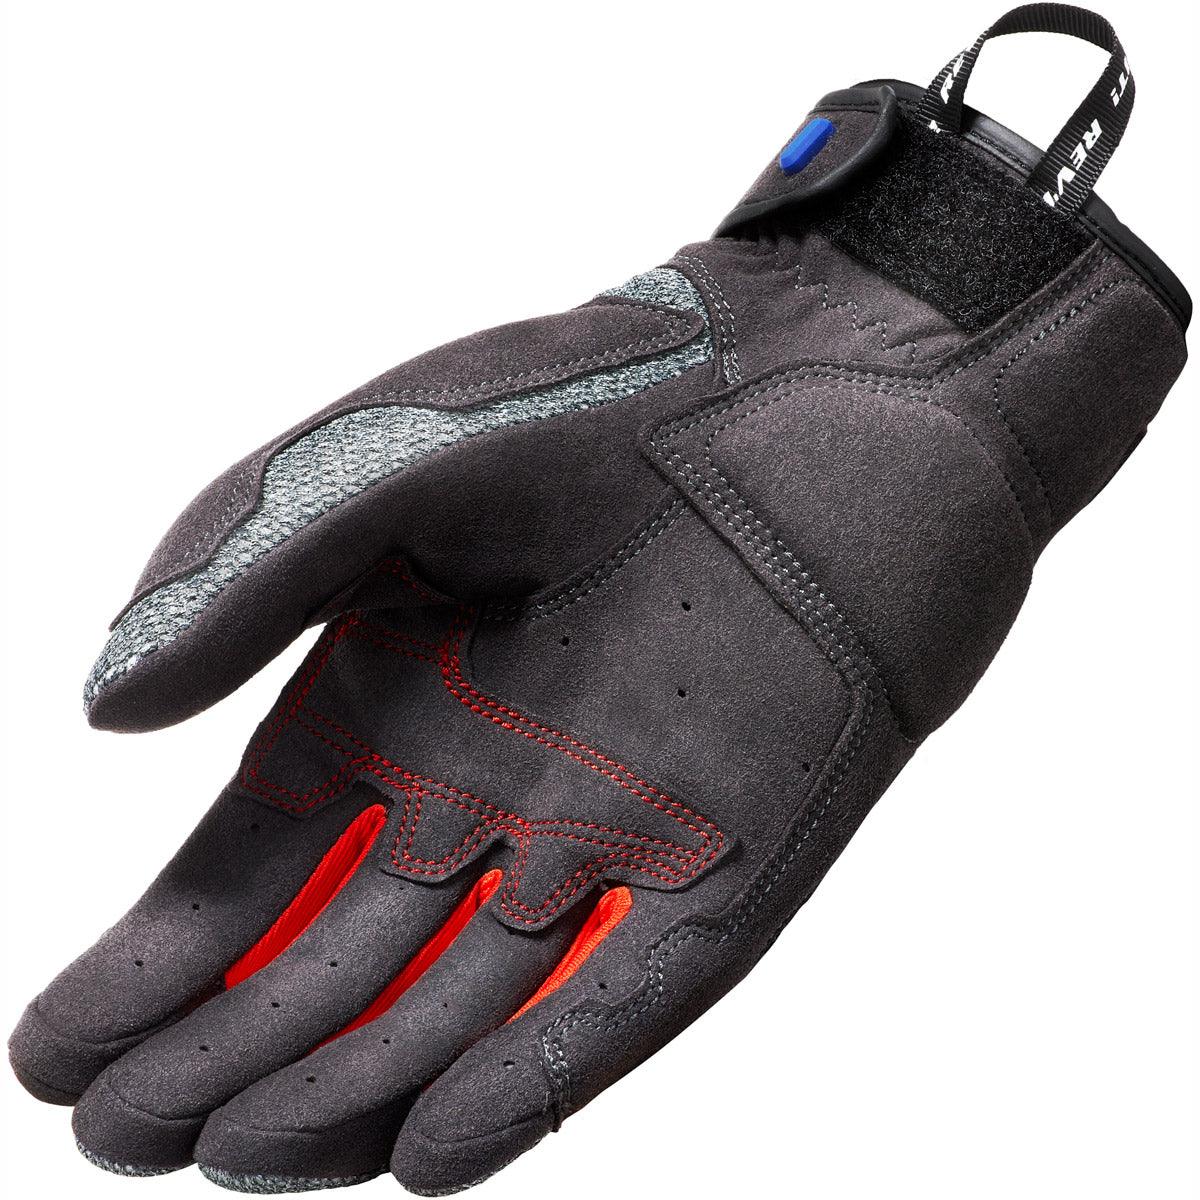 Rev It! Volcano Gloves - Black Grey - The Motocrosshut